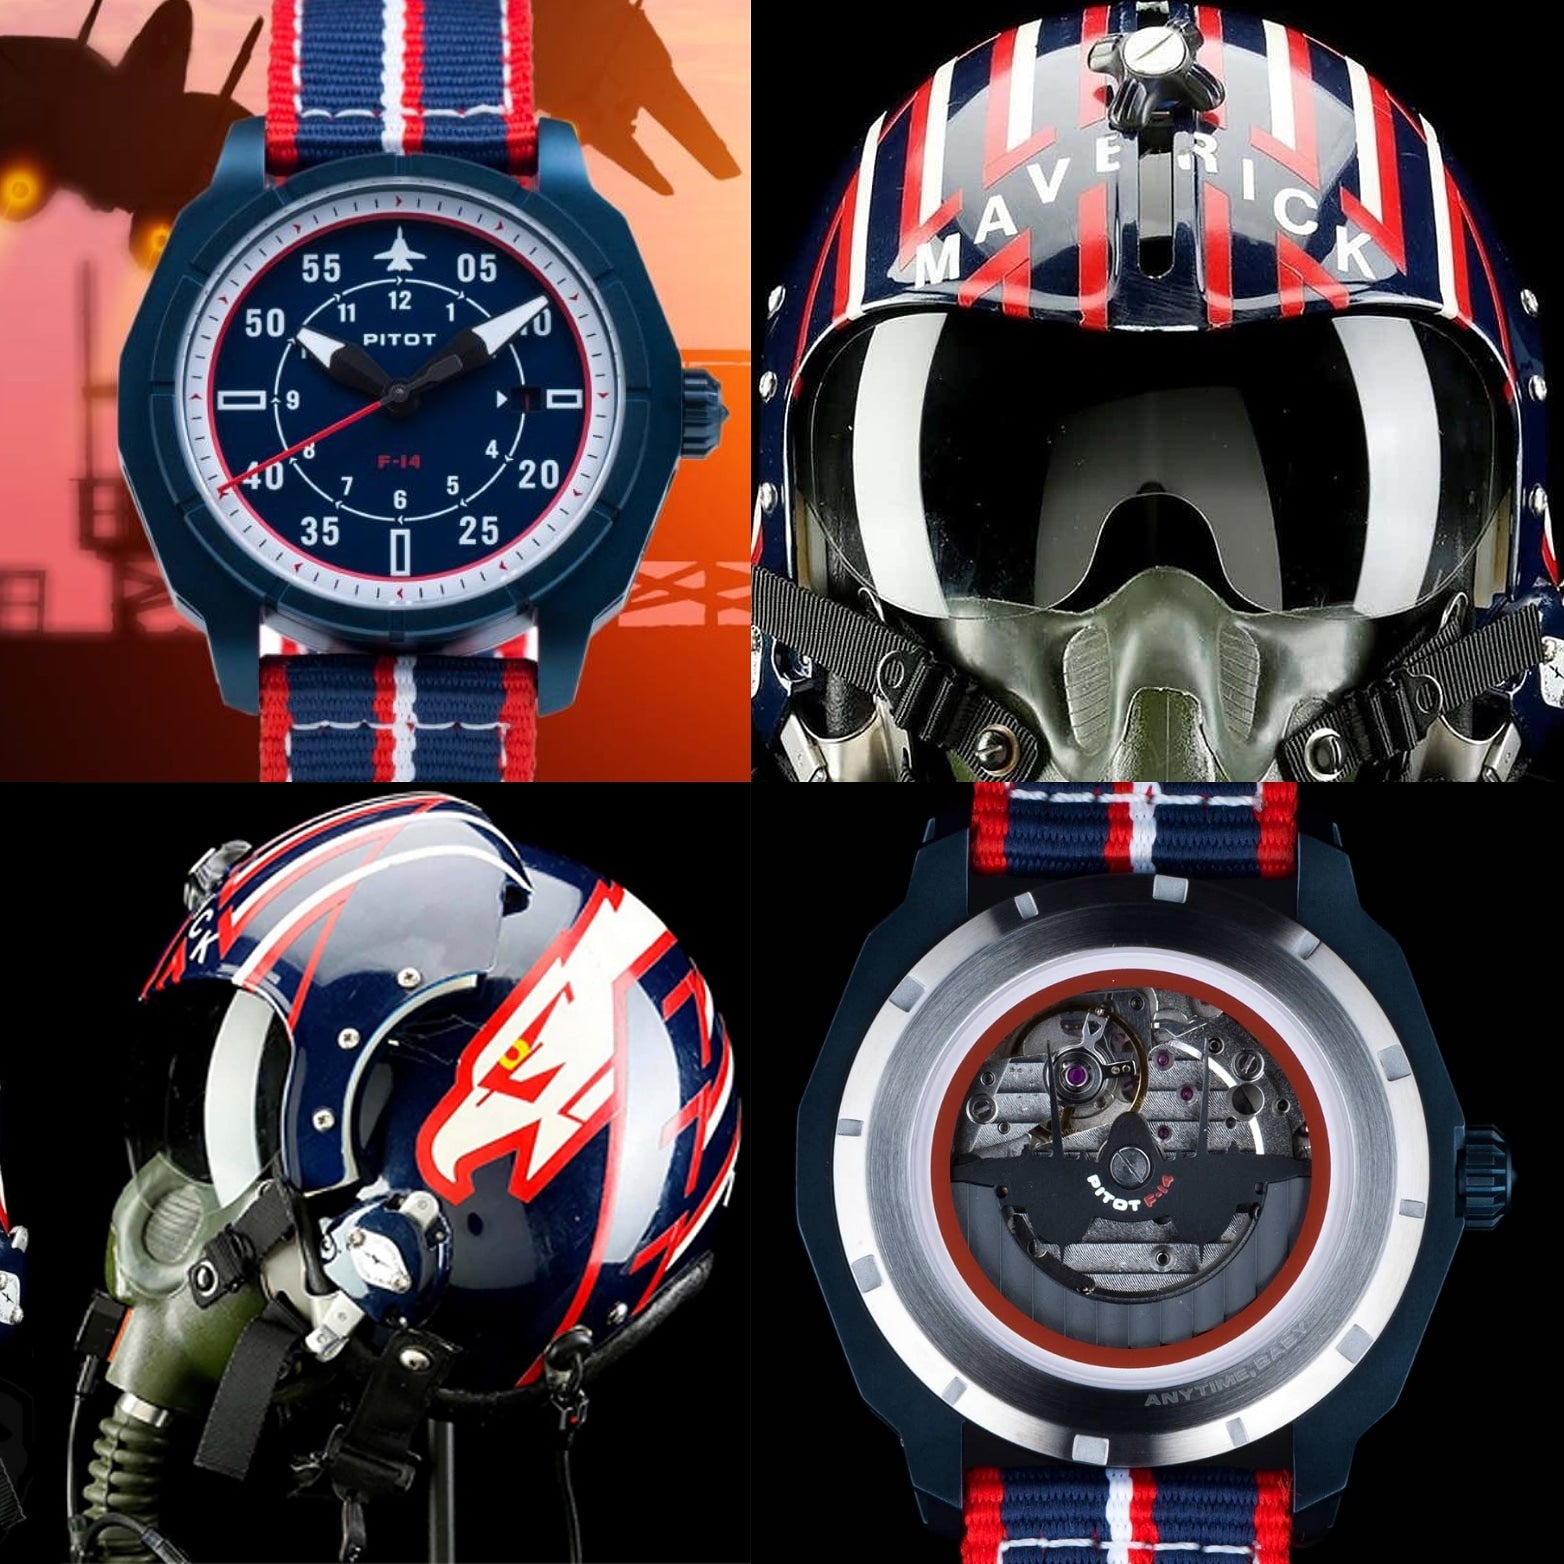 F-14 watch inspired by Top GUn